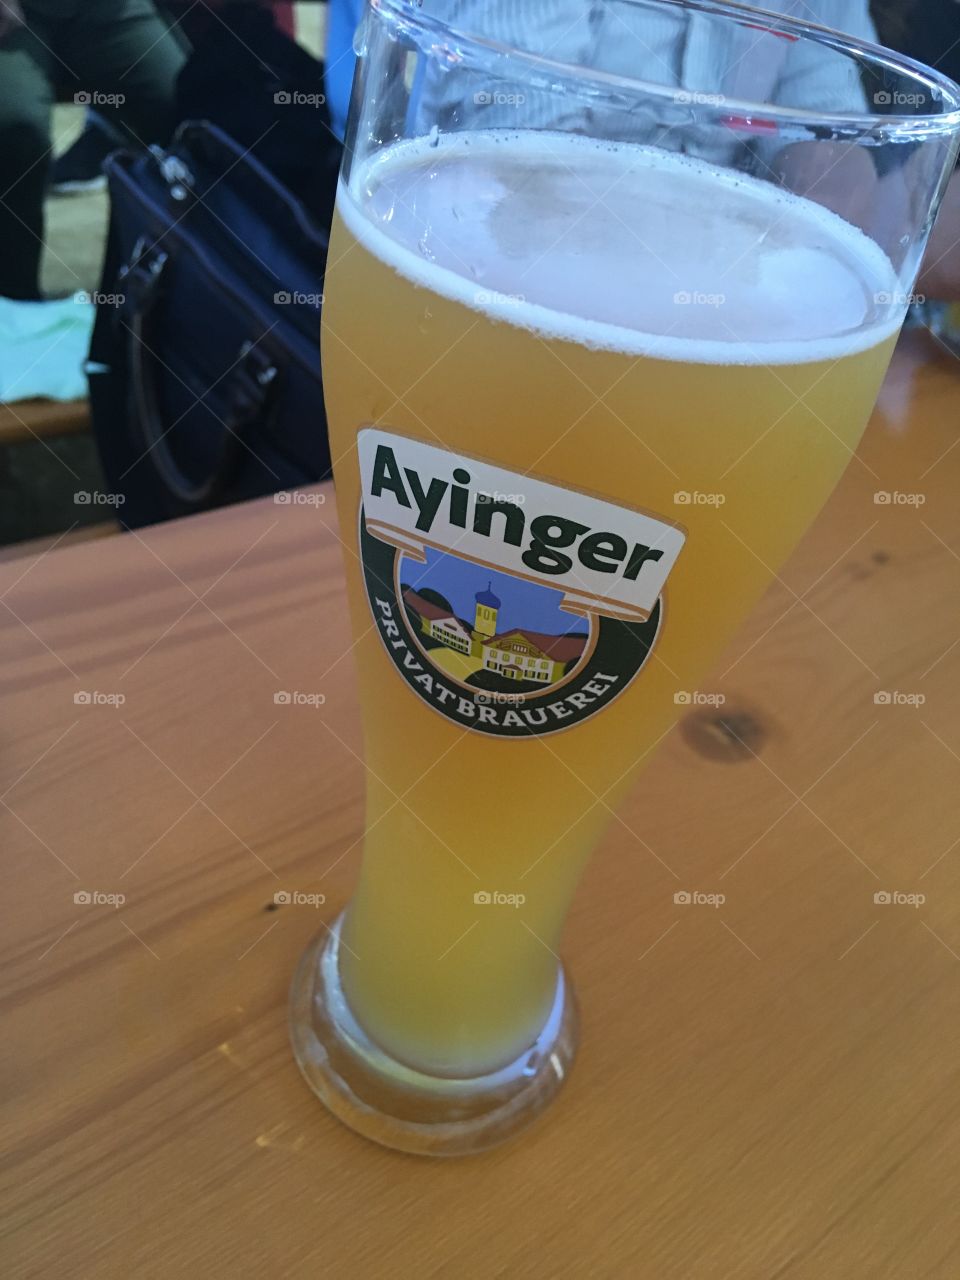 Ayinger beer!!